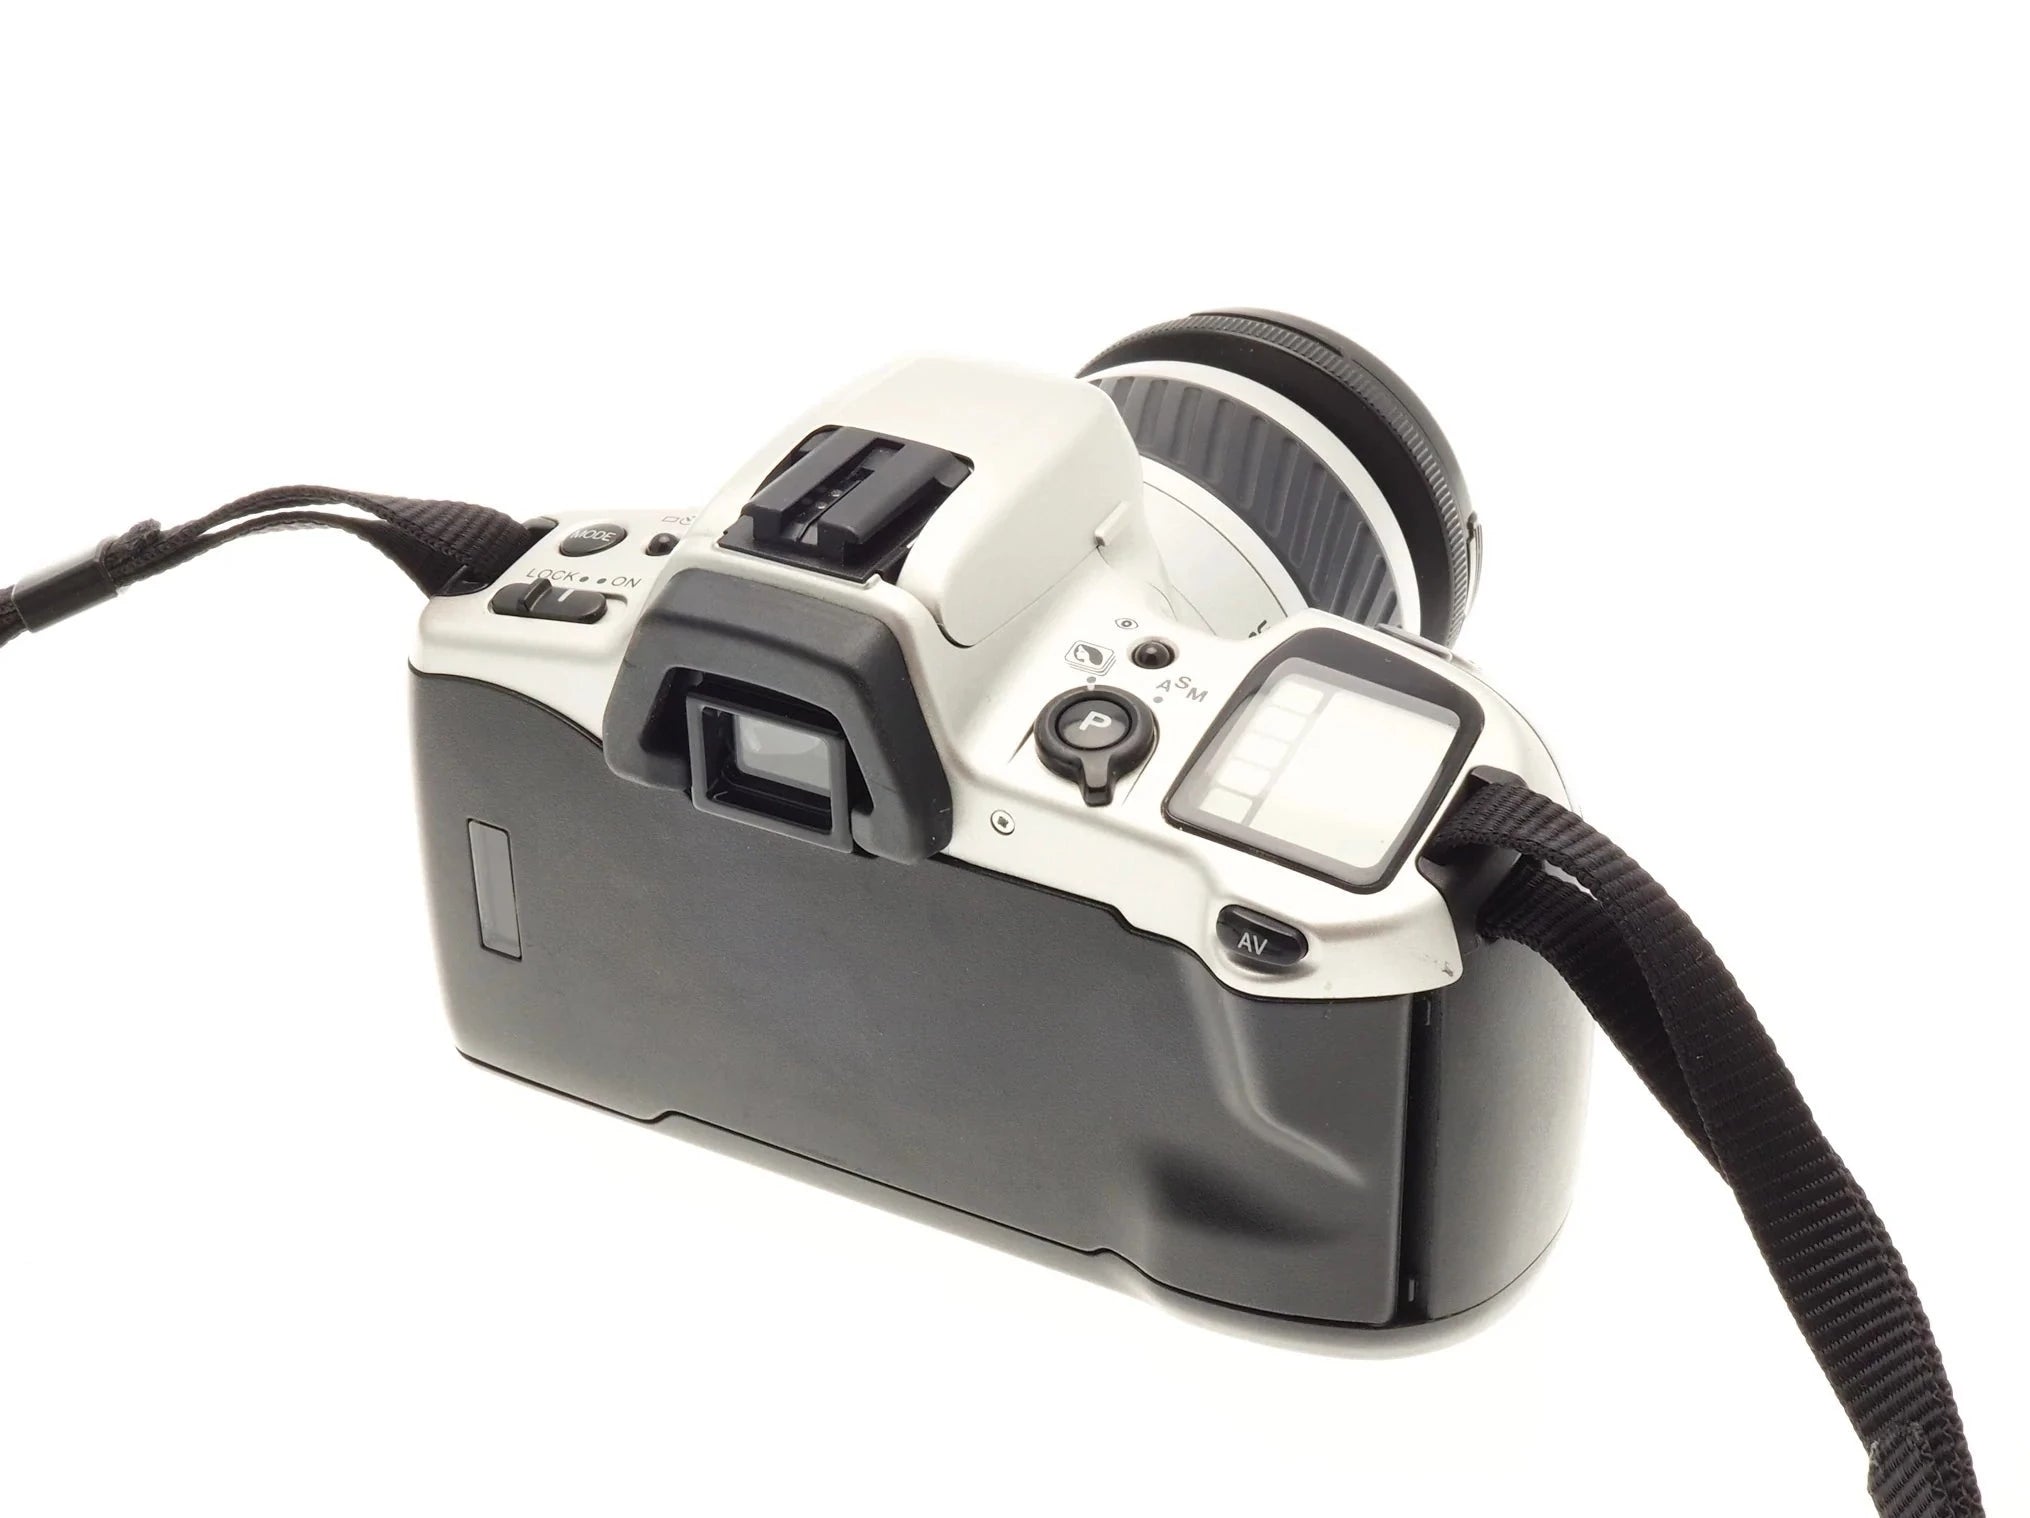 Minolta Dynax 500si - 35mm Film Camera - with 6 month warranty